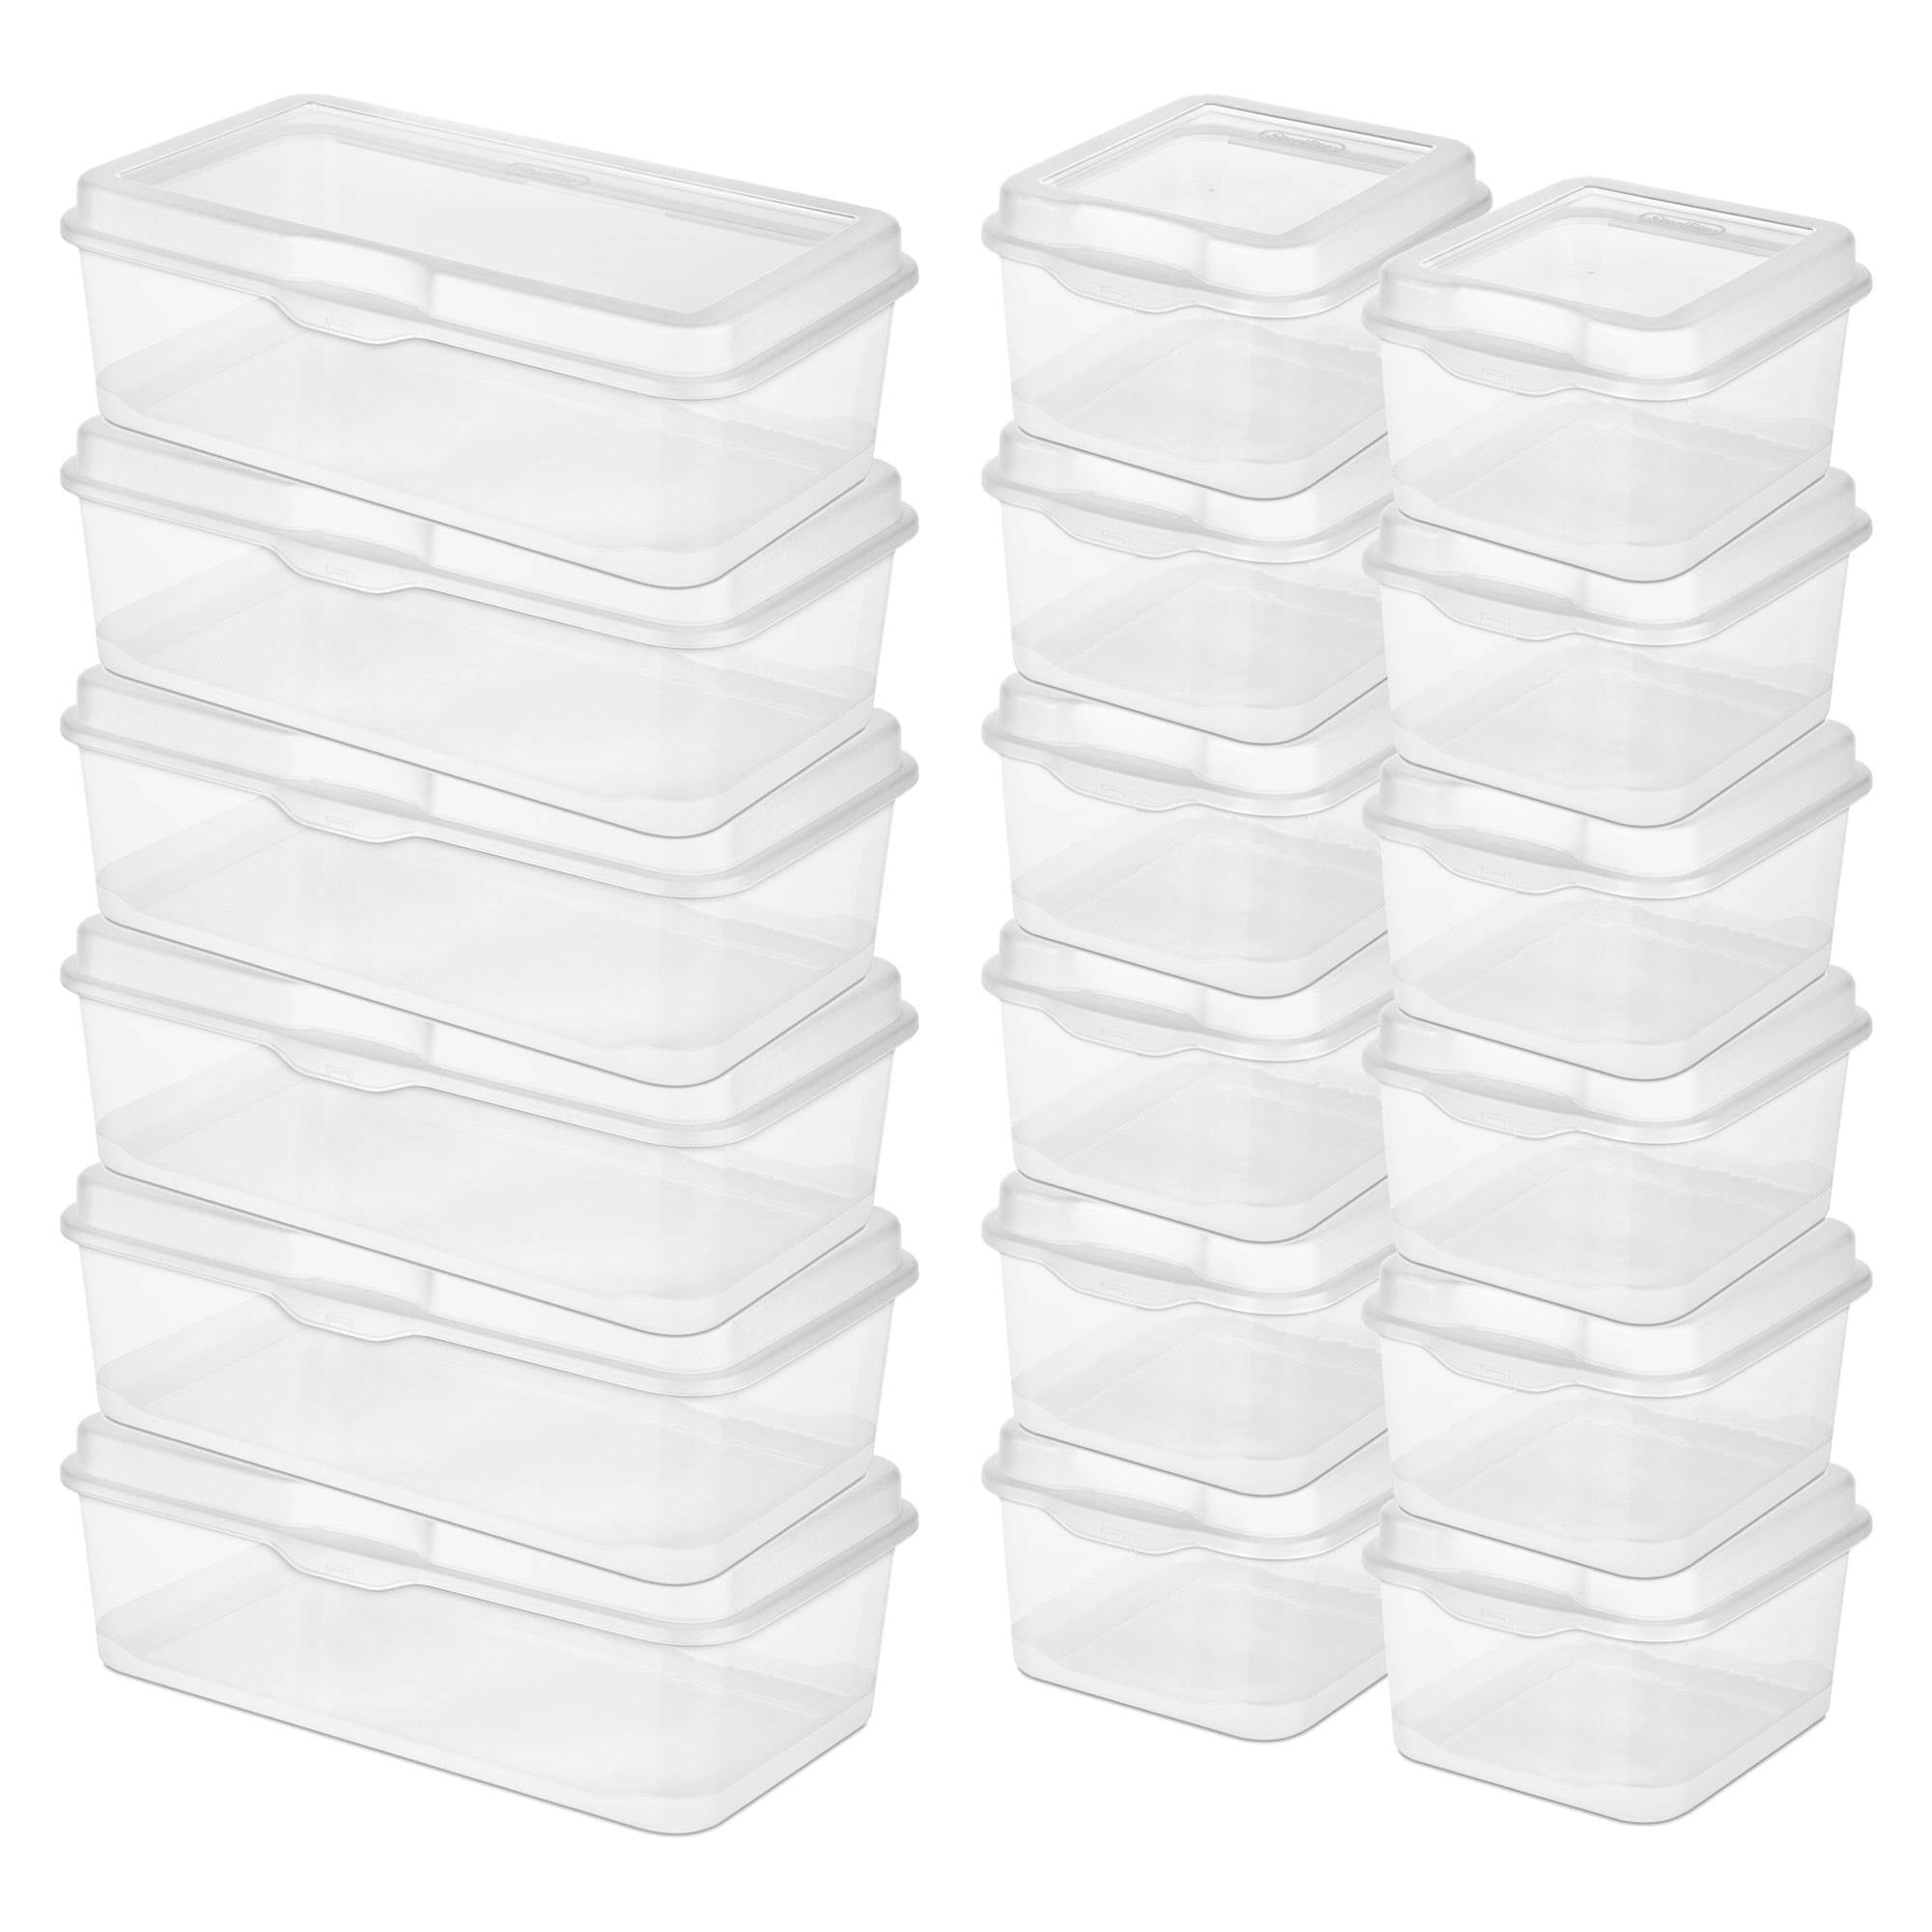 6 Quart Clear Storage Box, 12 Pack